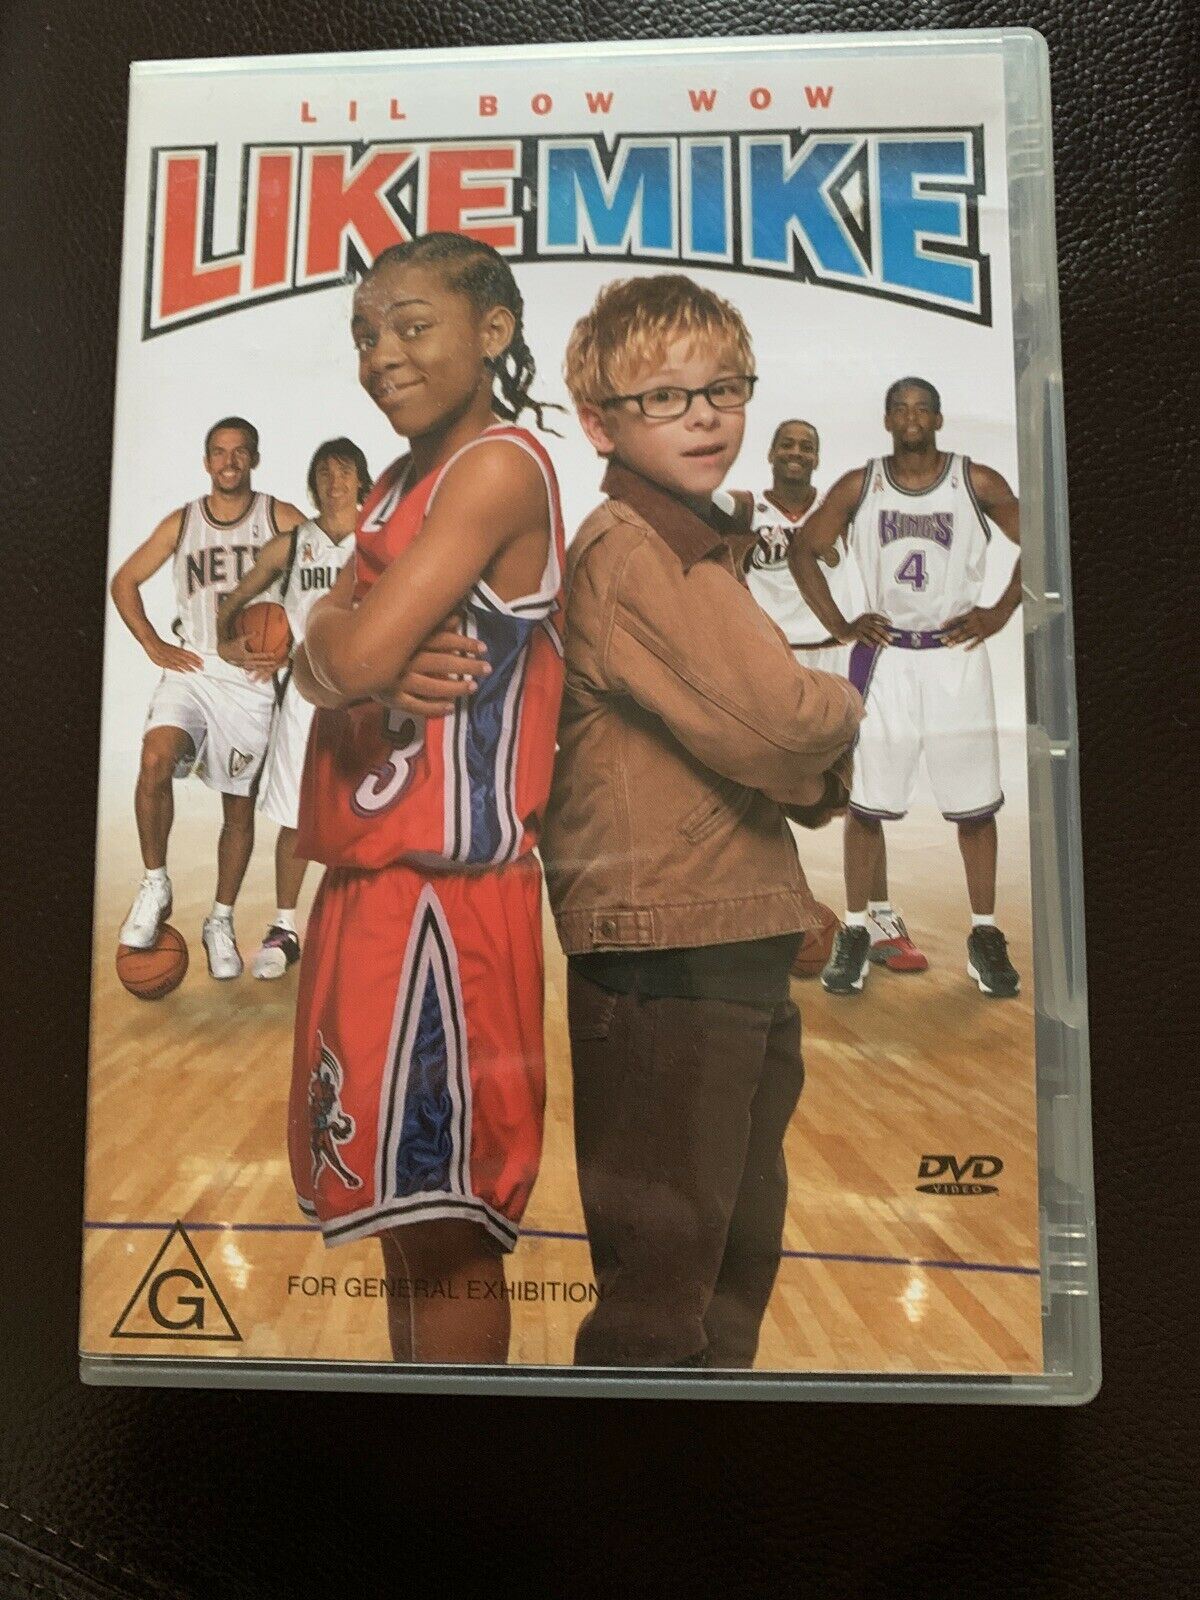 Like Mike (DVD, 2004) Lil Bow Wow. Region 4